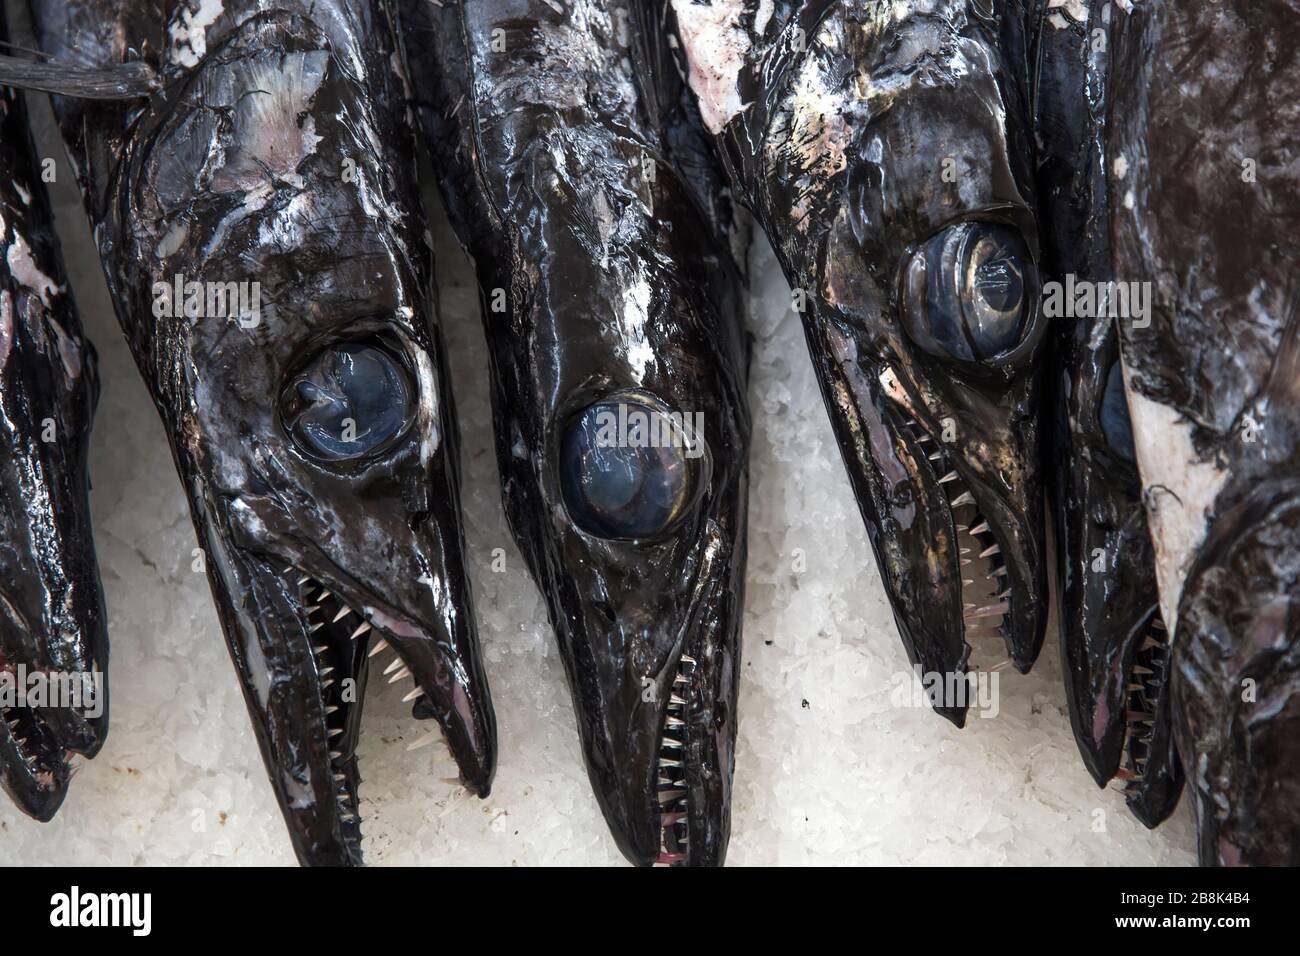 Fresh espada fish on traditional fish market in Funchal at Madeira island, Portugal Stock Photo